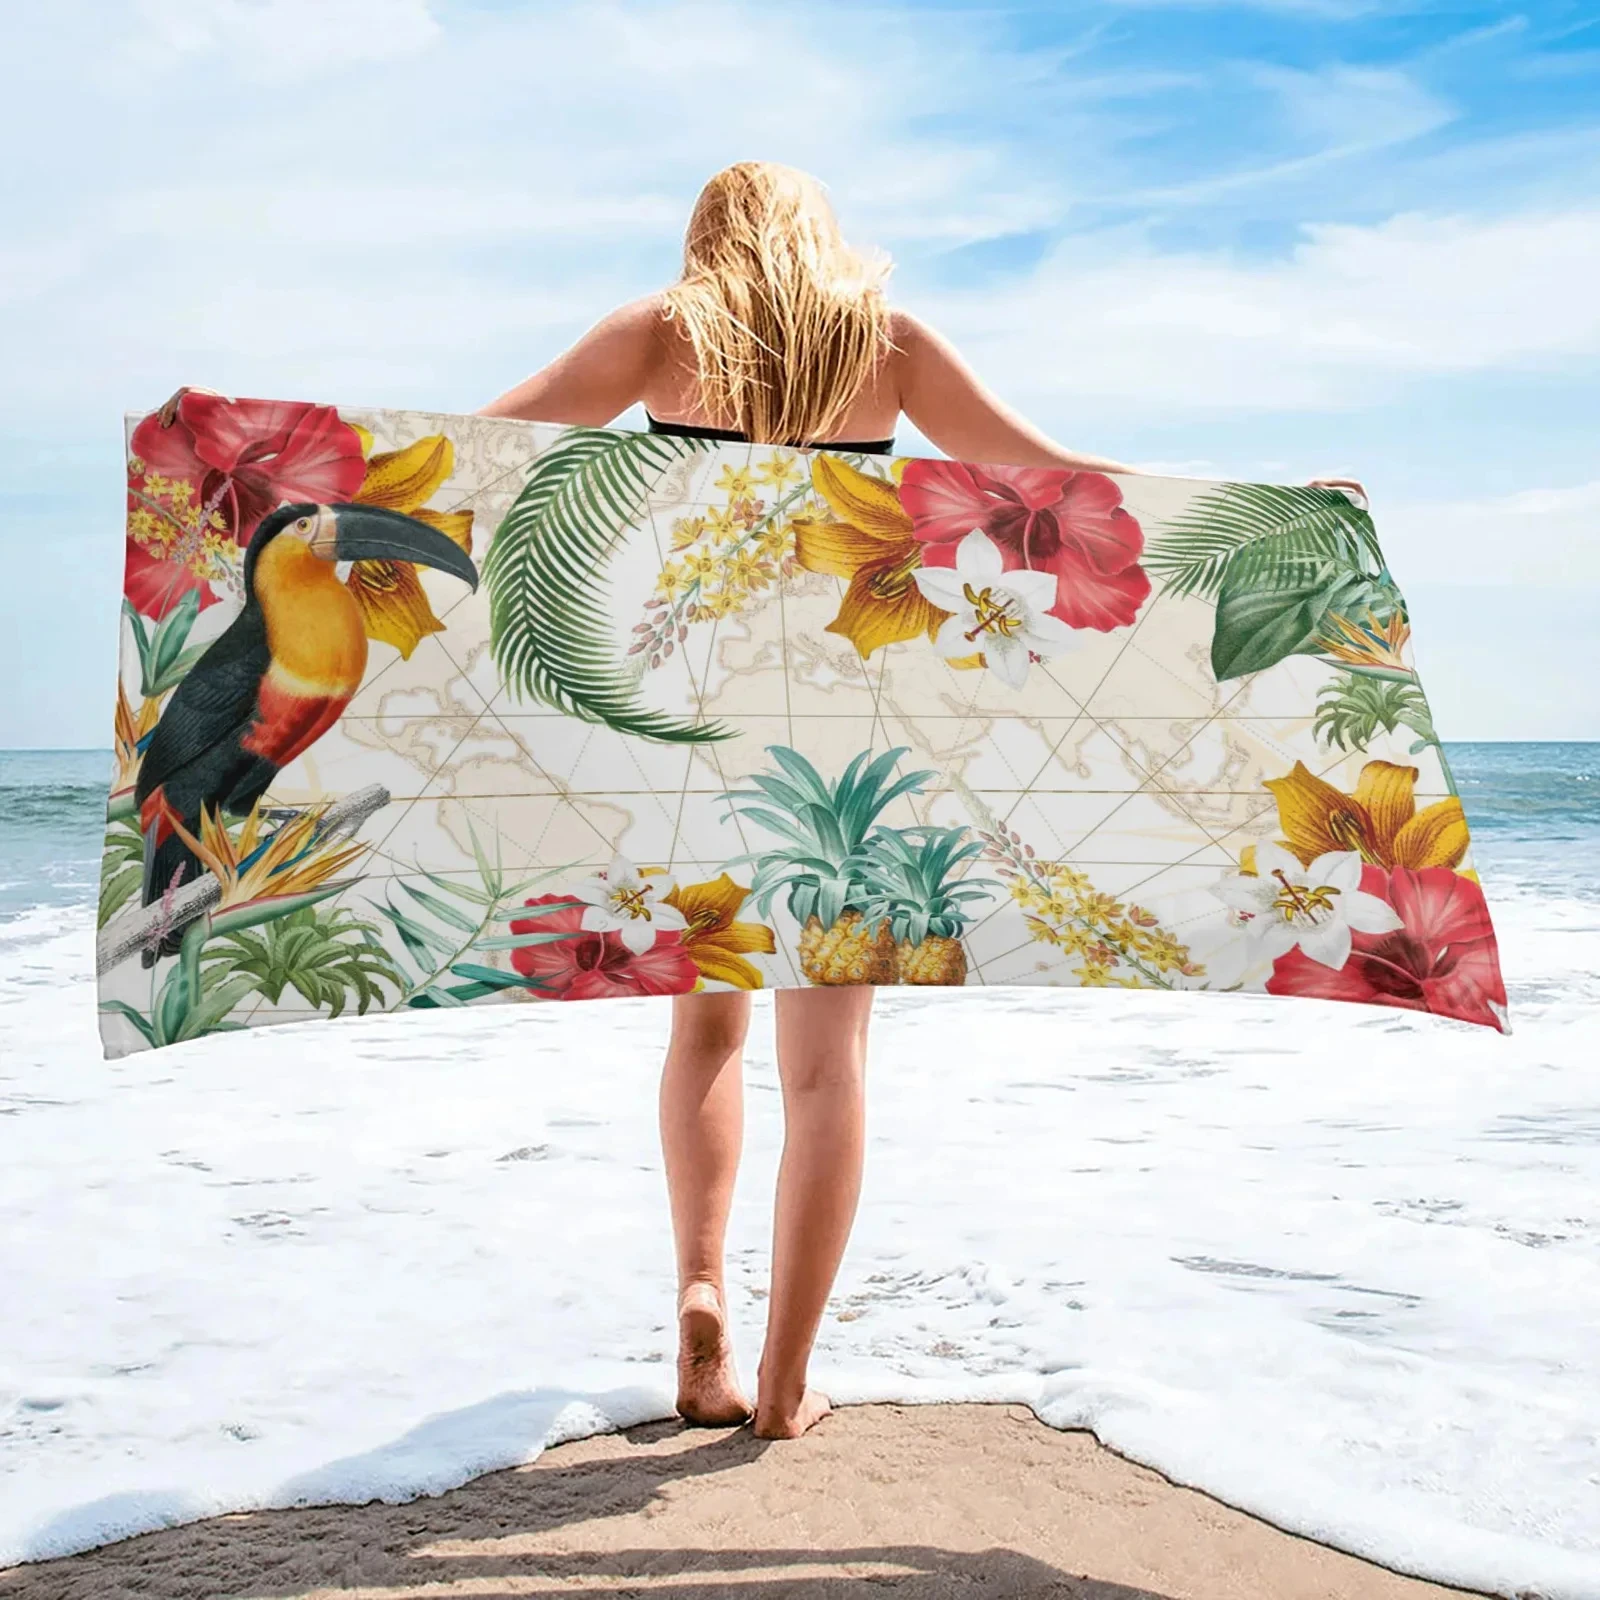 

Parrot Flower Beach Towel Bird Green Leaves Bath Towel Quick Dry Surf Blanket Microfiber Gym Sport Travel Towels Bikini Cover Up